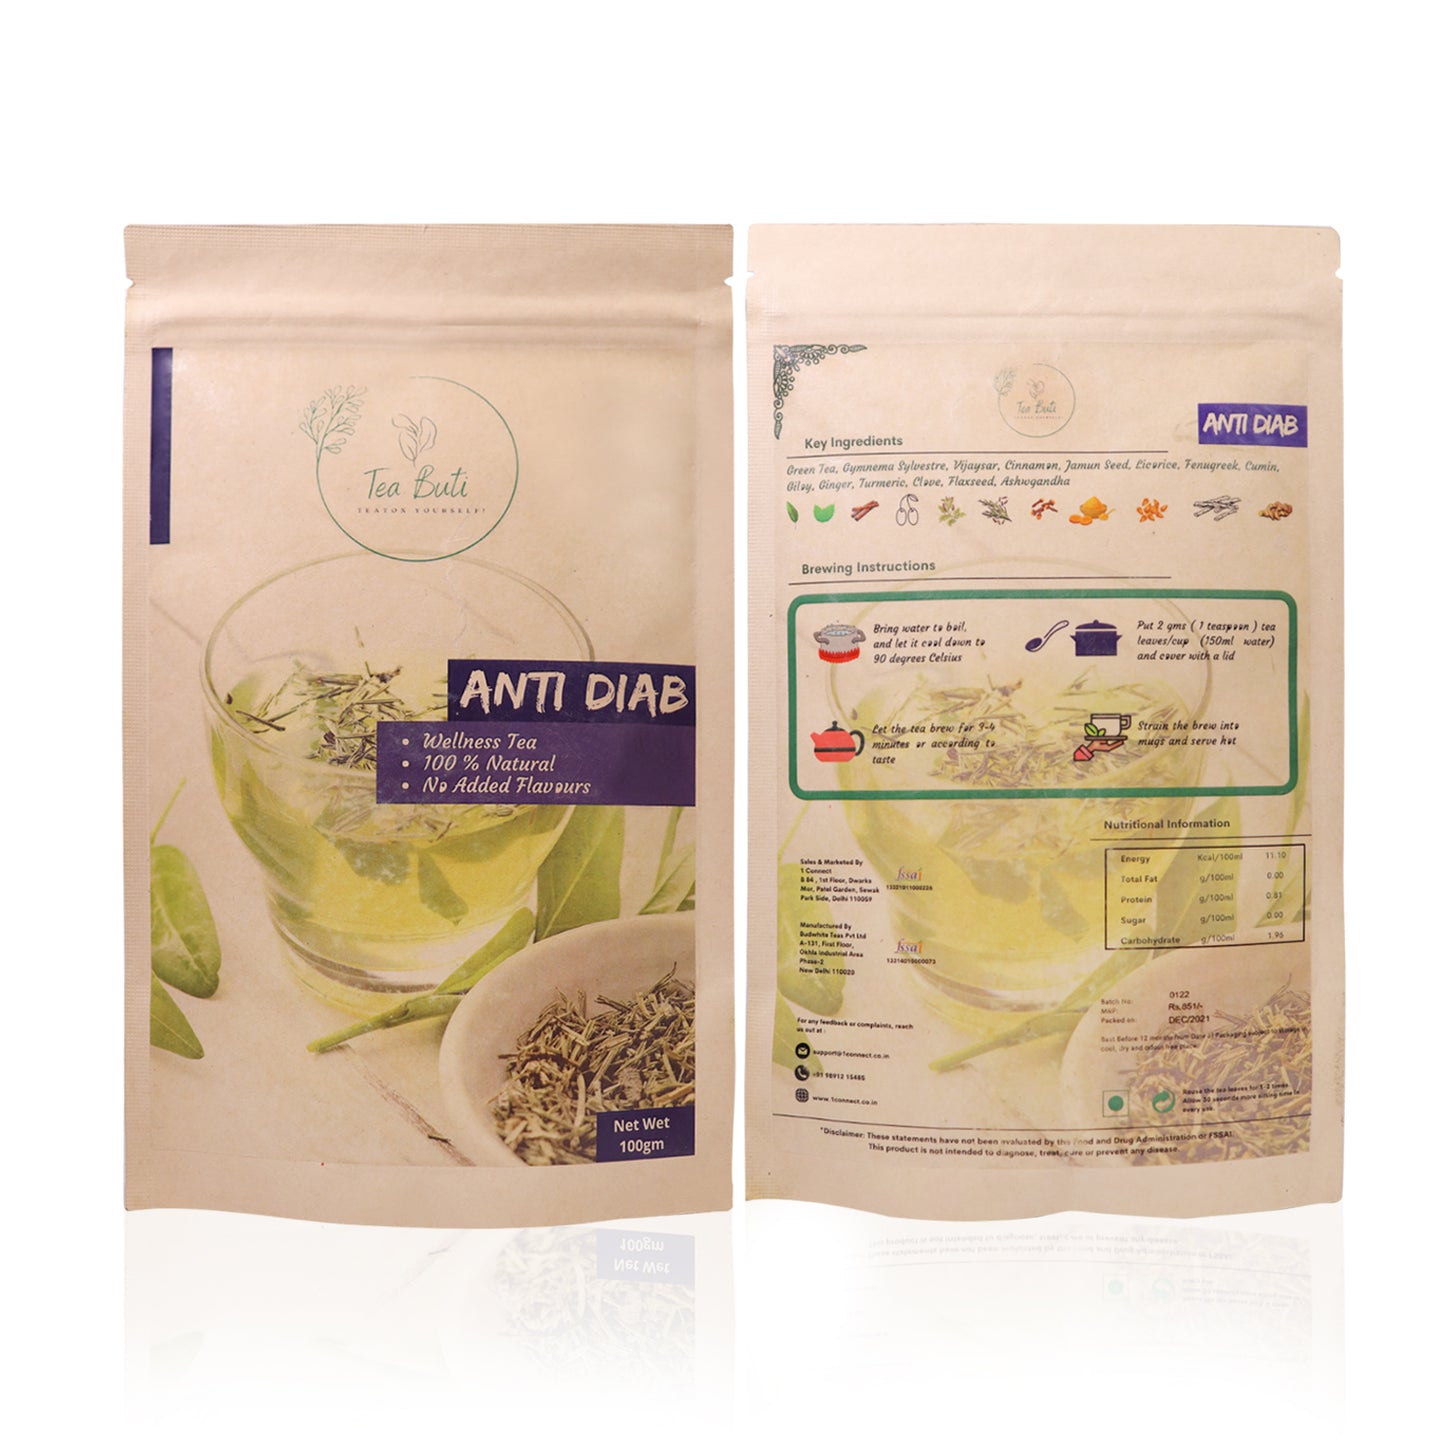 
                  
                    Tea Buti Anti Diab Wellness Tea (100g)
                  
                